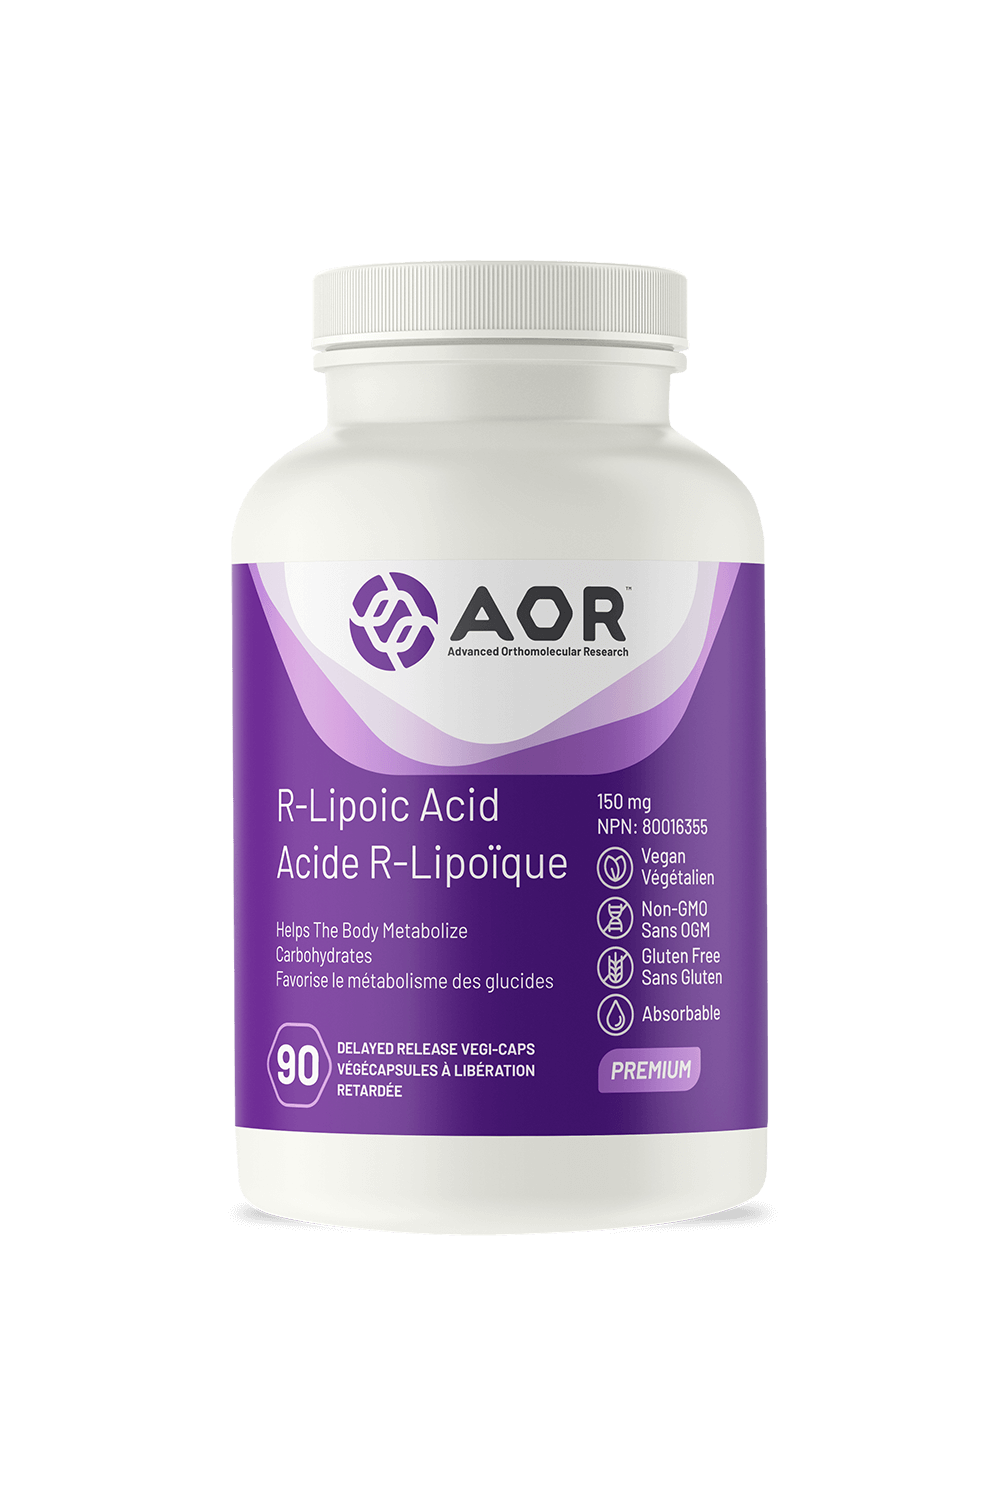 AOR R-Lipoic Acid 90s